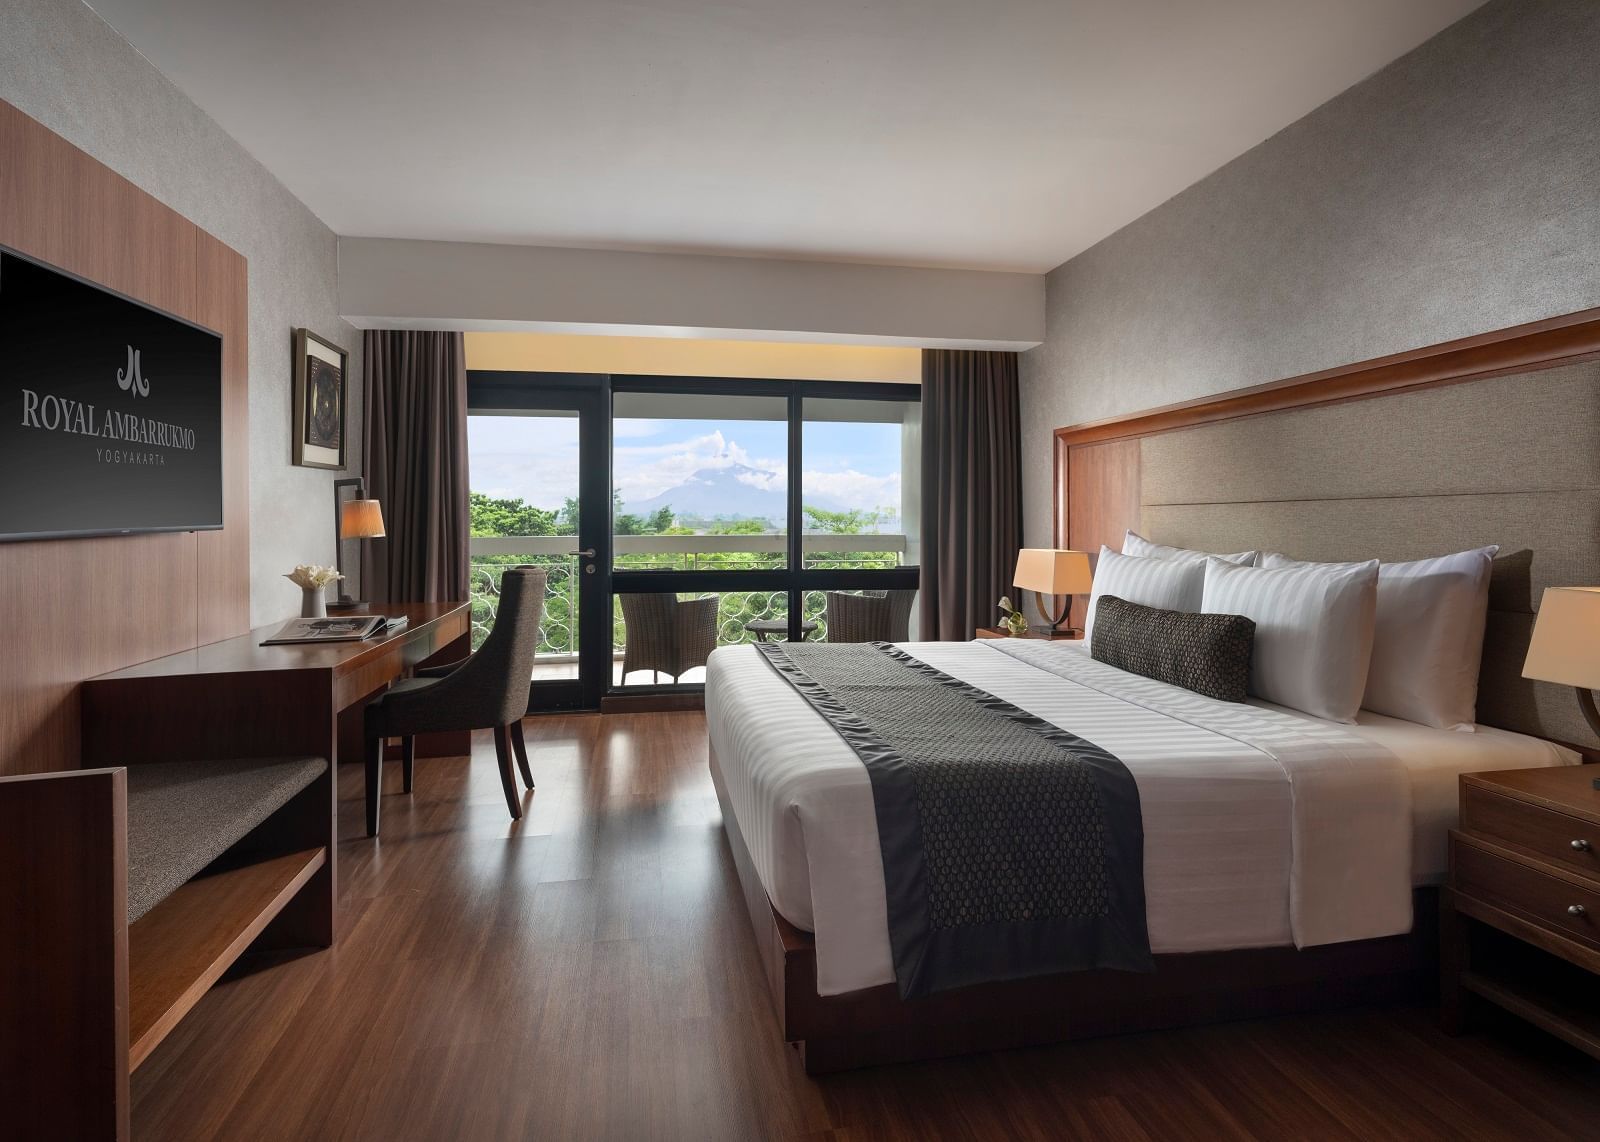 King David Jerusalem Hotel | Rooms & Suites | Dan Hotels Israel